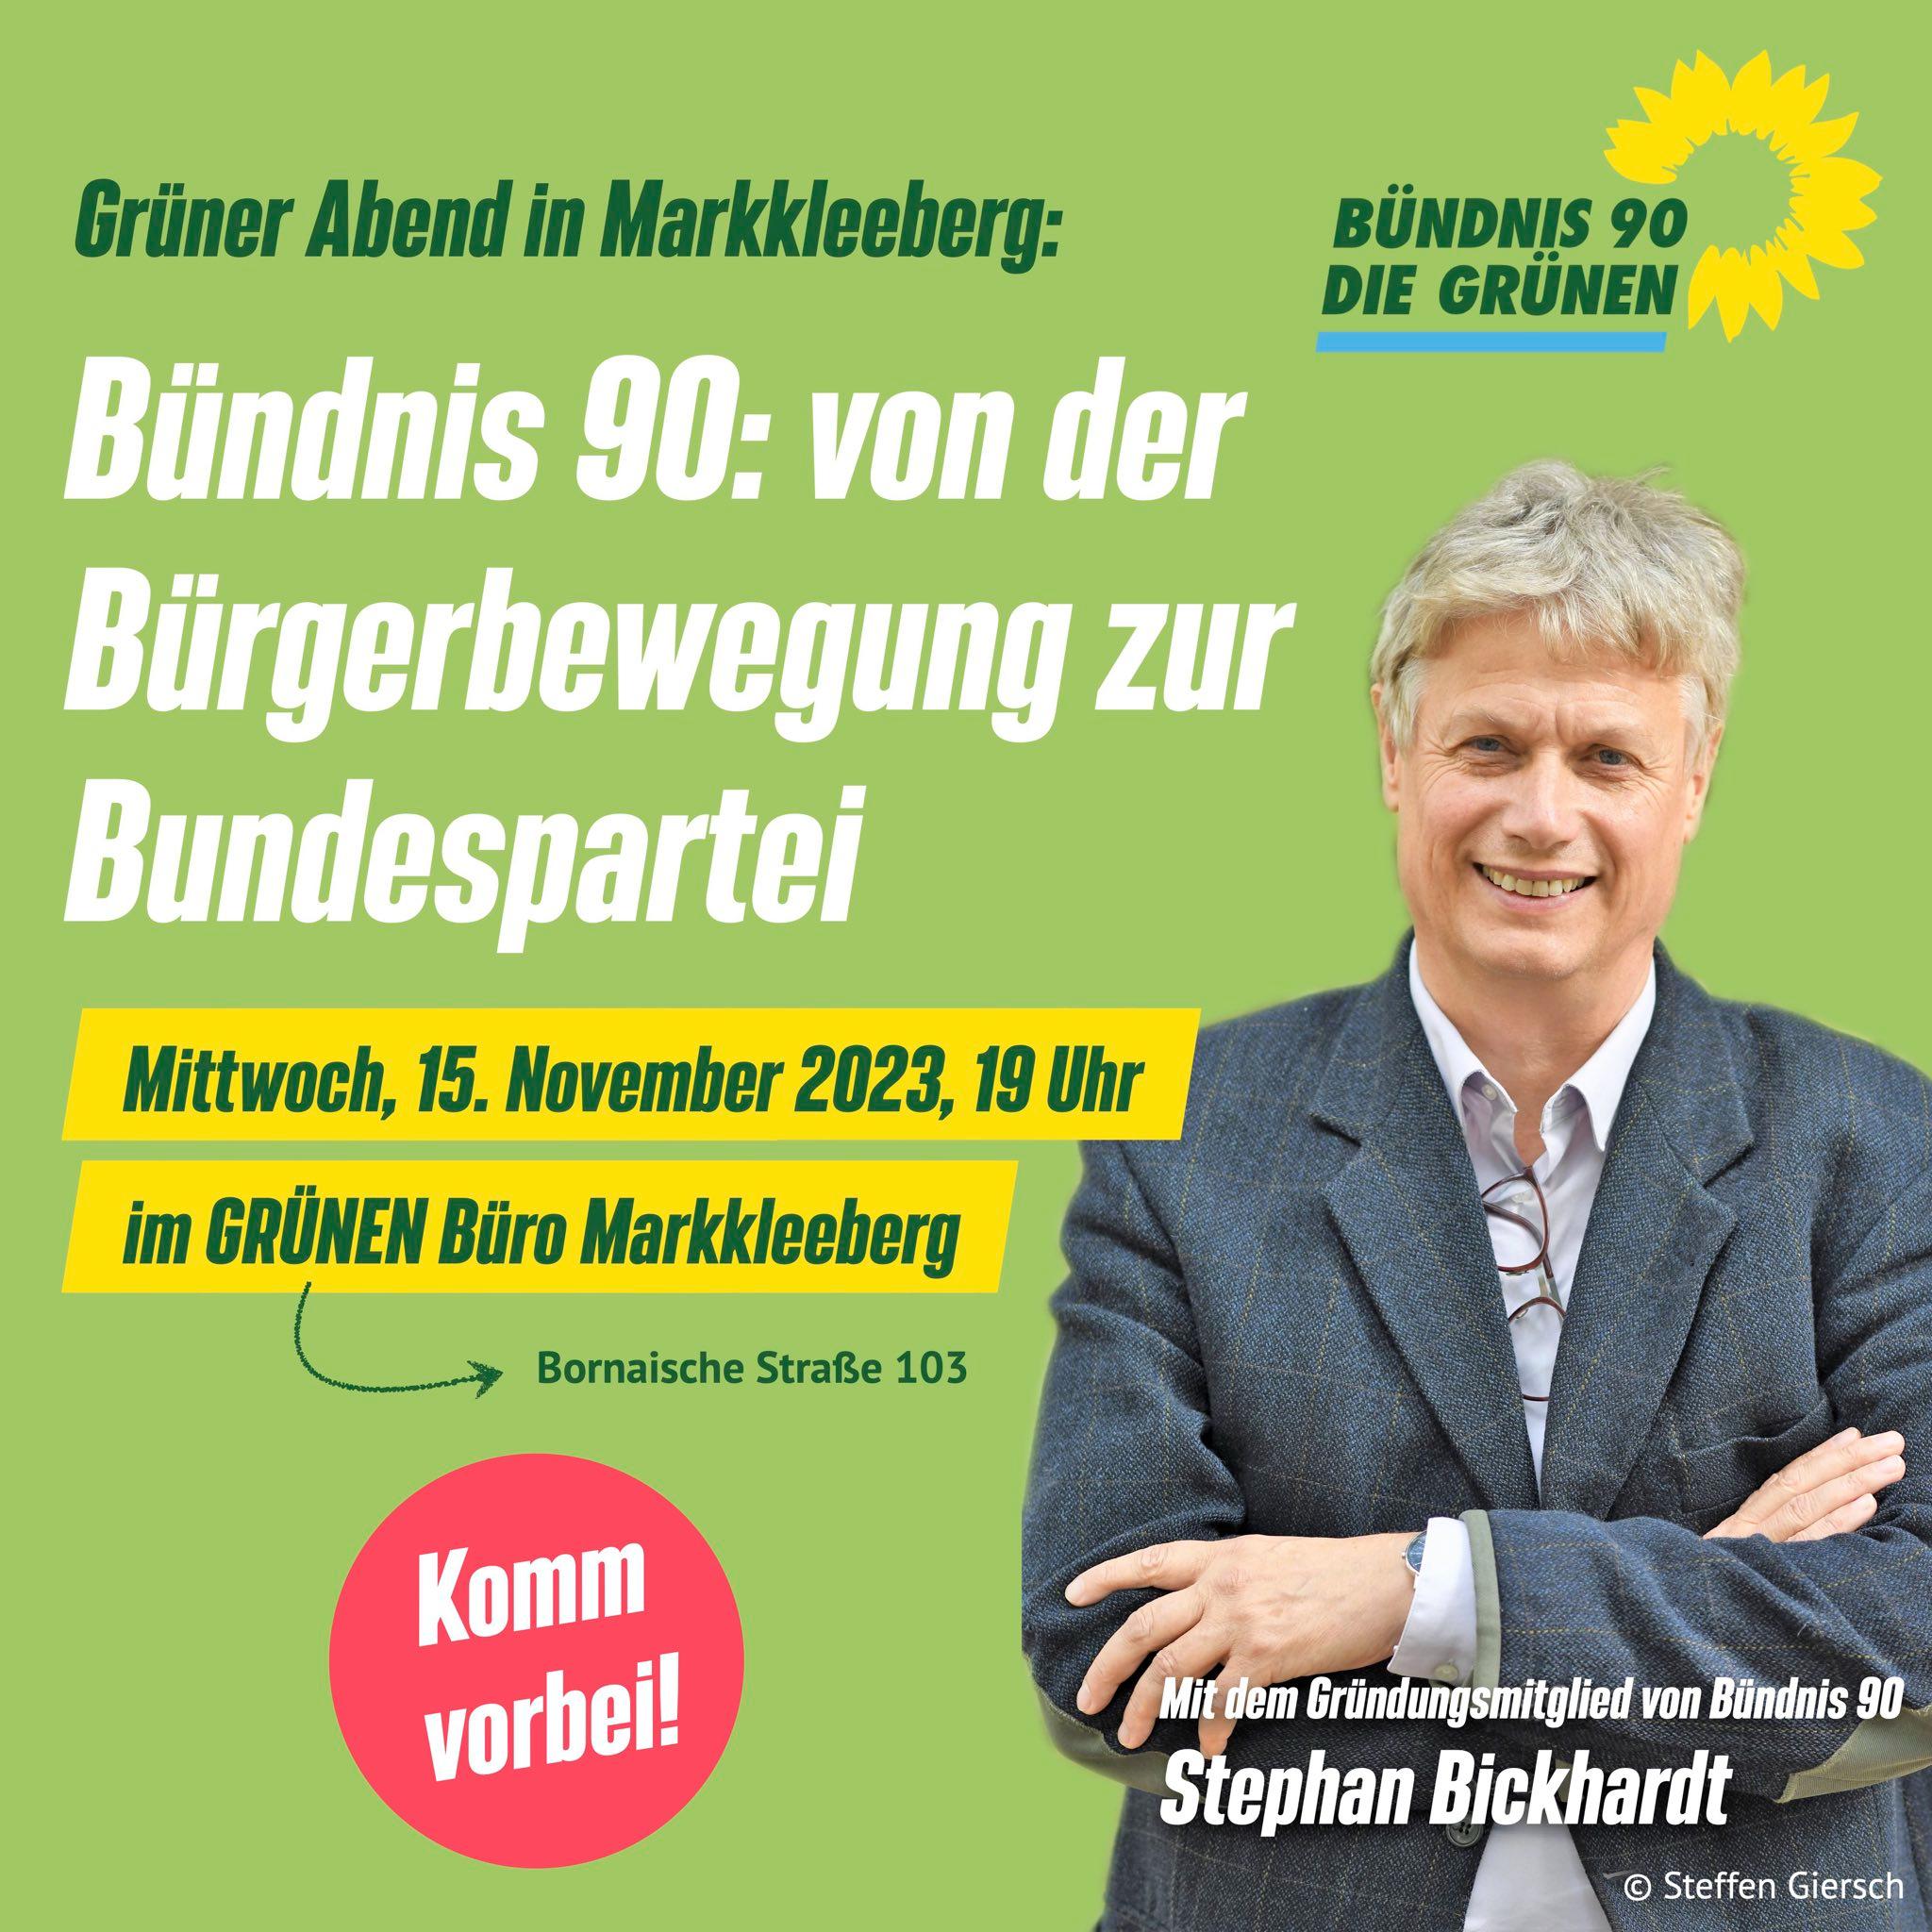 Stephan Bickhardt